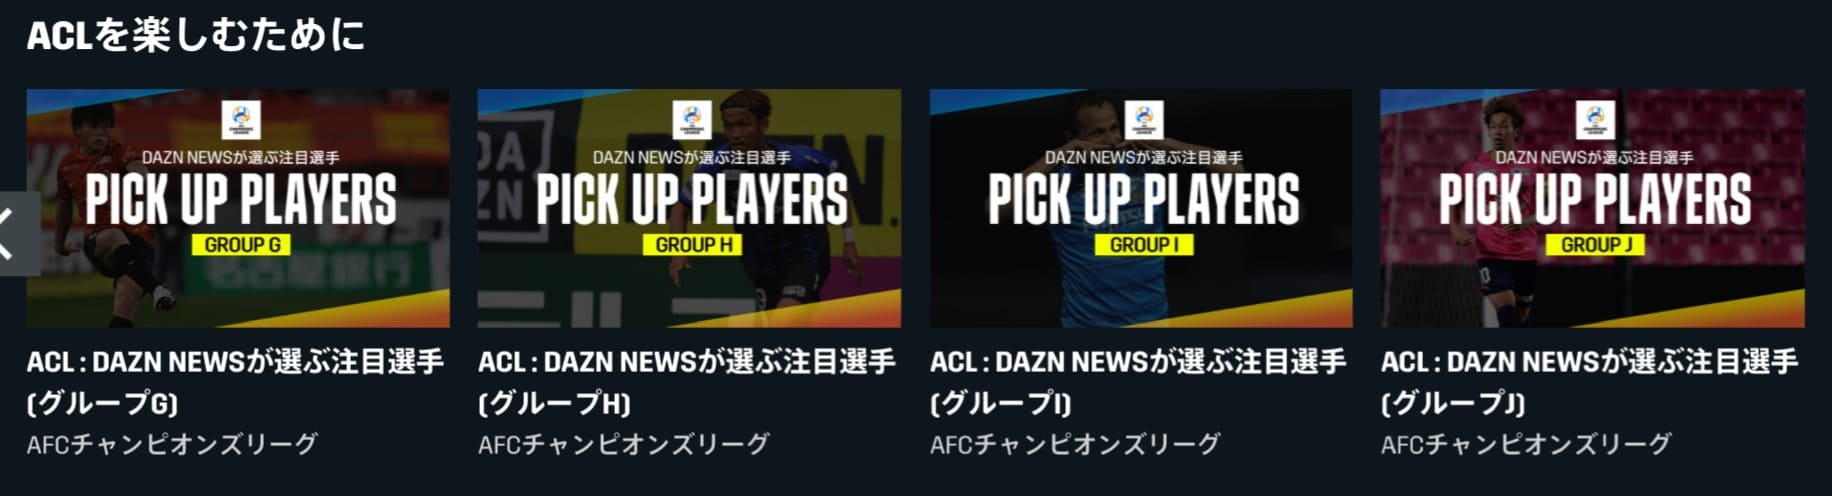 Acl21ガンバ大阪の試合日程とテレビ中継 ネット配信動画はある 東地区グループステージ 集中開催 Center Circle